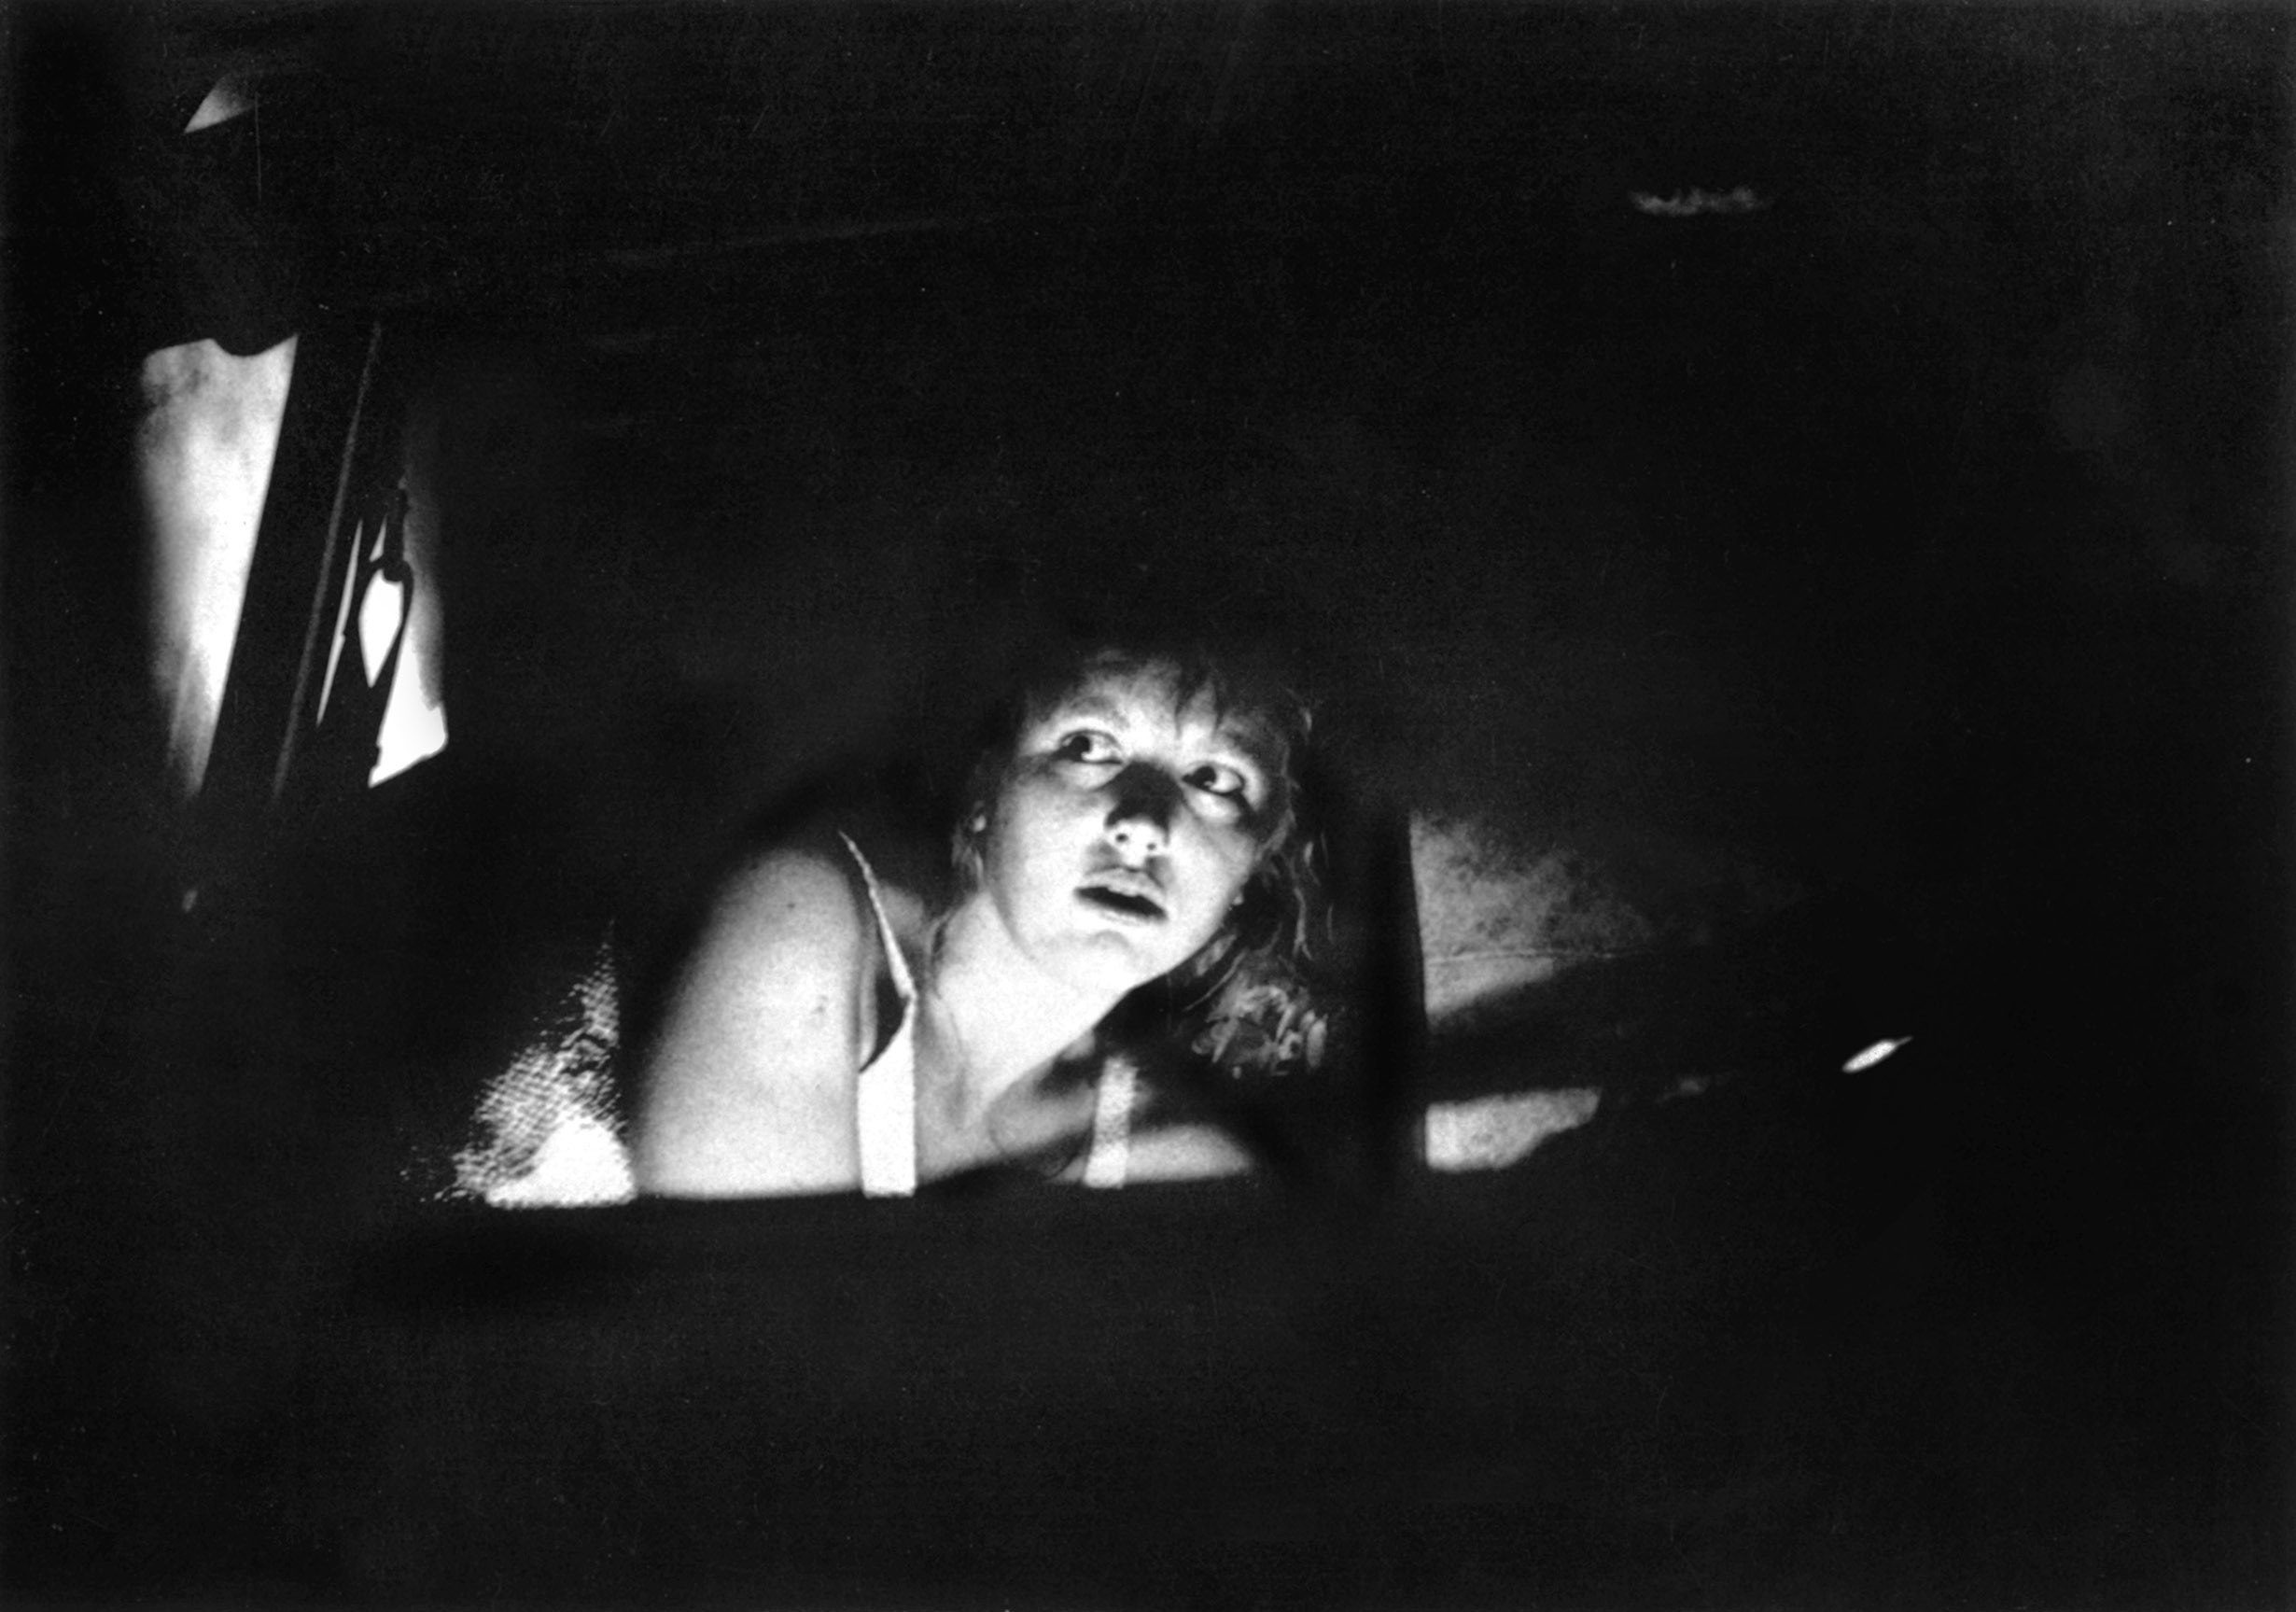 A woman crawls around in the dark